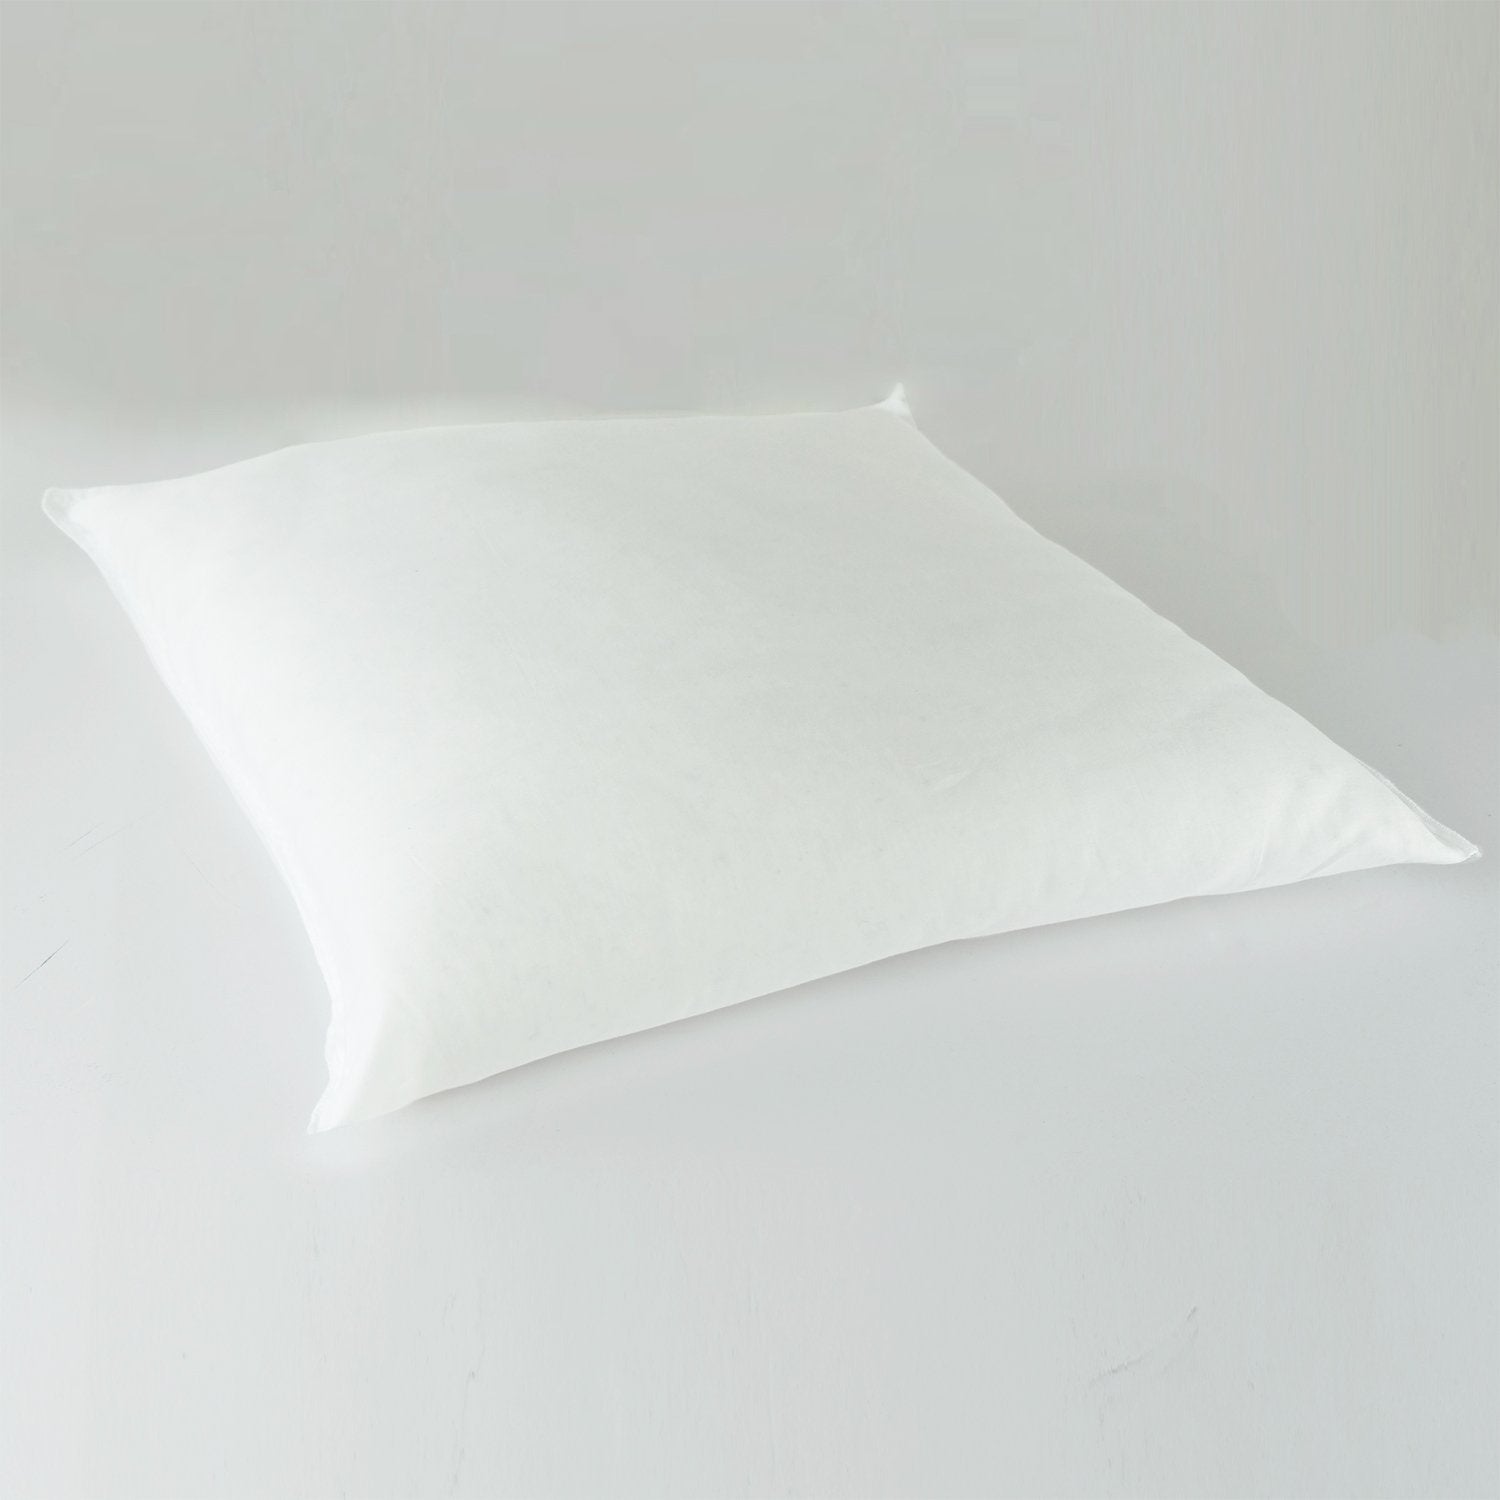 J-Life Taidai Navy Zabuton Floor Pillow_Pillows & Shams